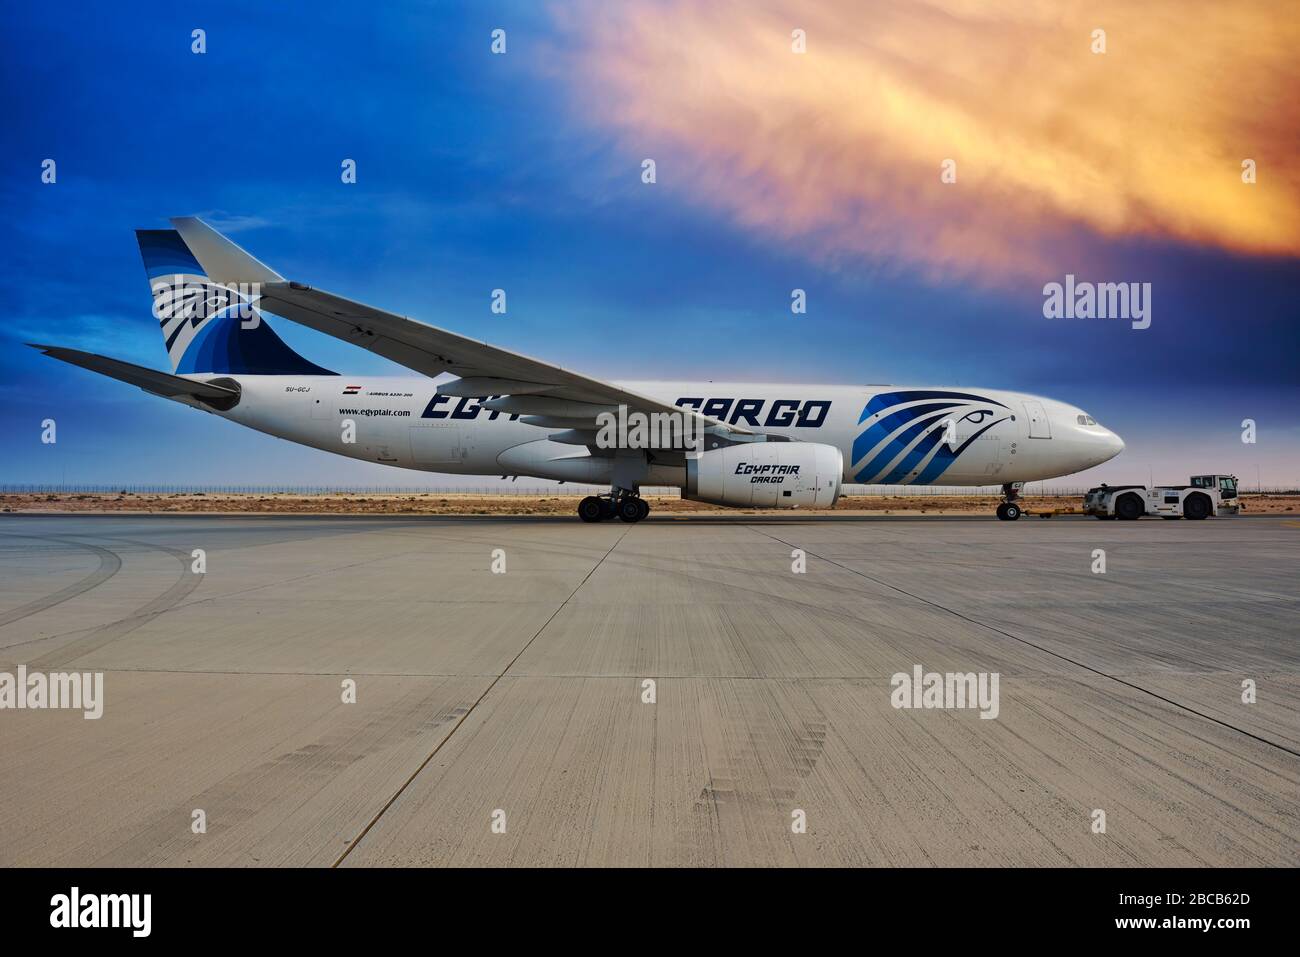 Egypt Air Cargo Airbus A330 Aircraft Stock Photo